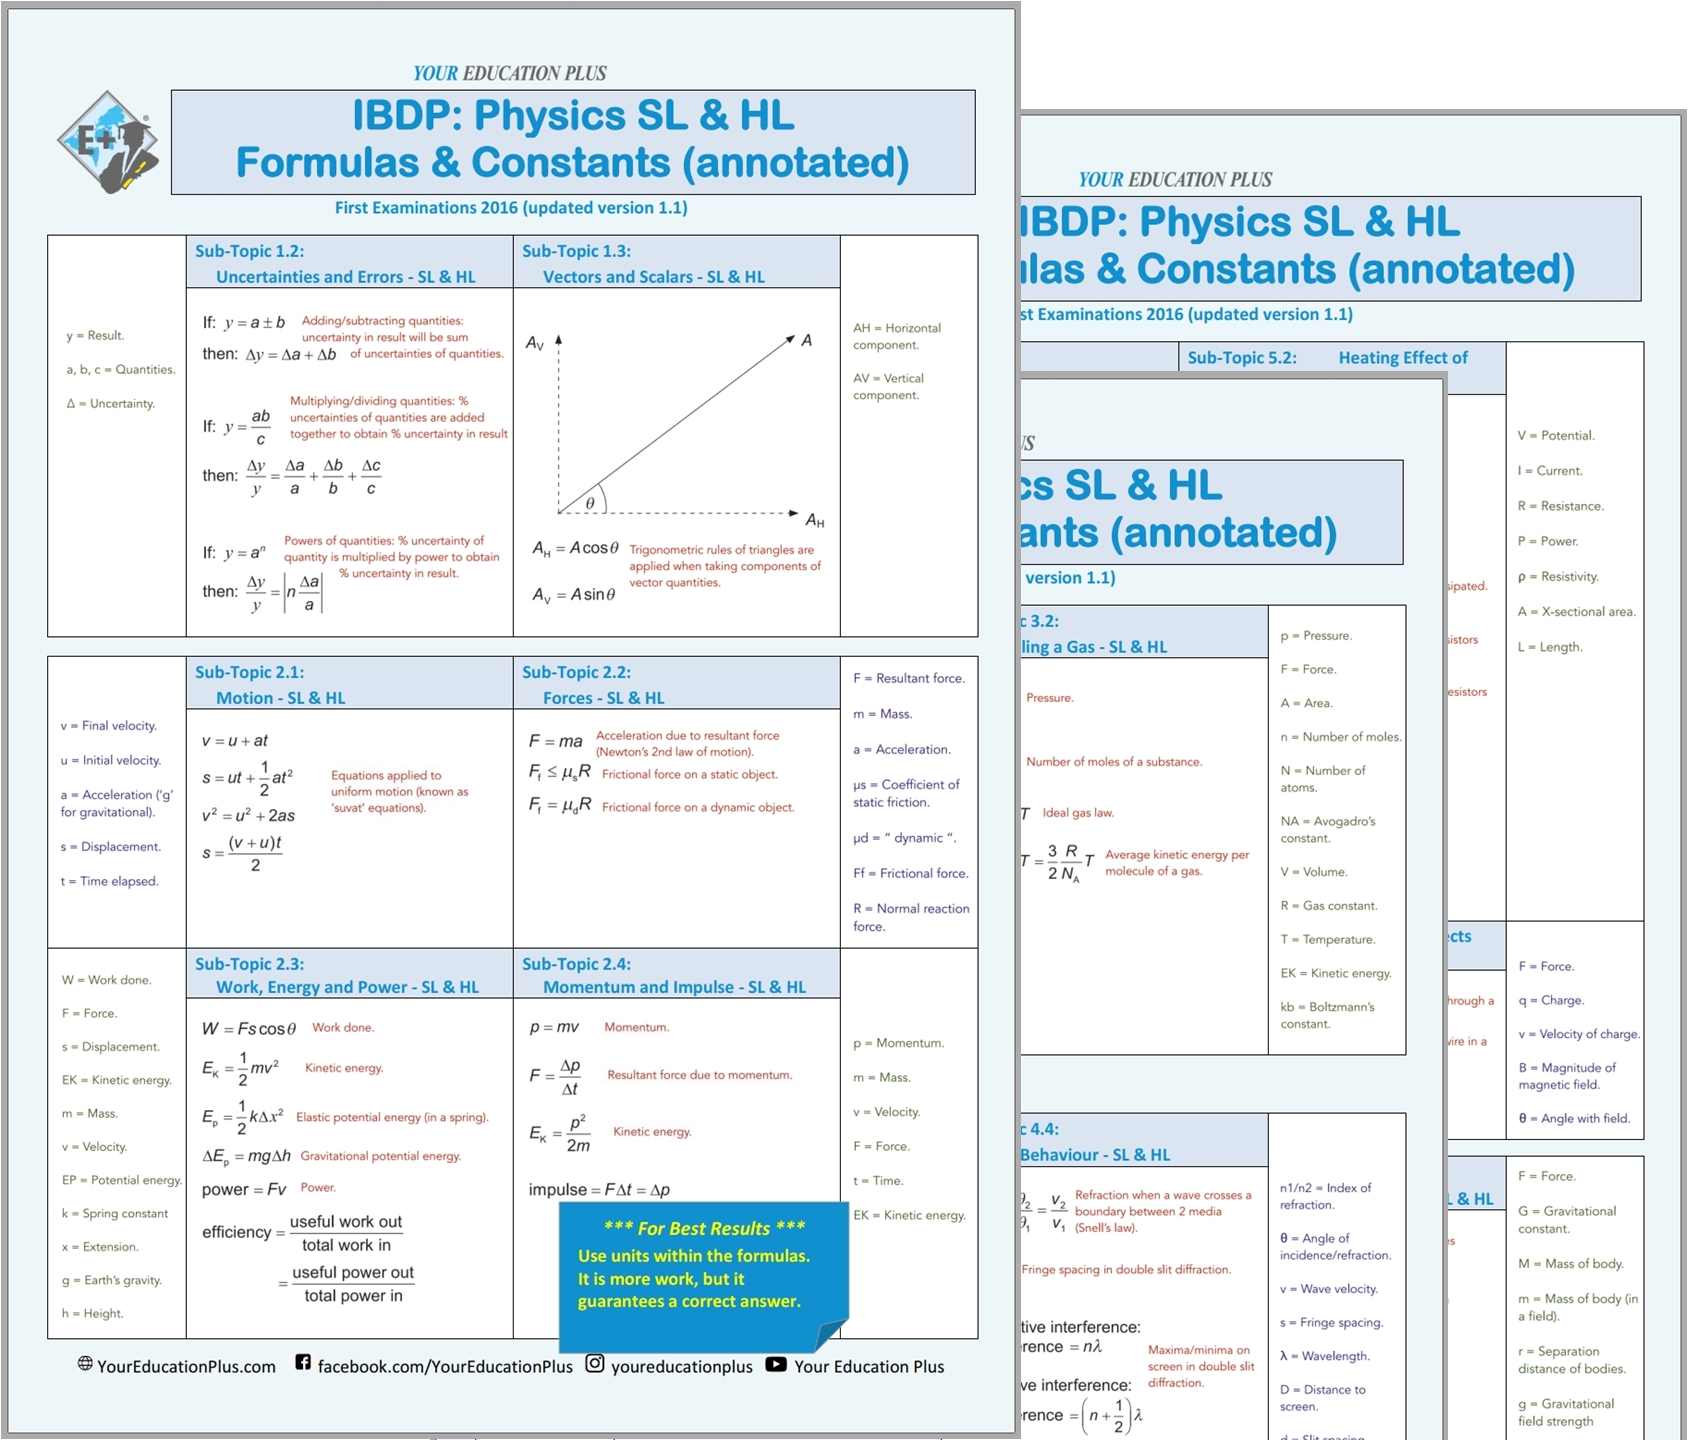 IBDP Physics Formulas (annotated)